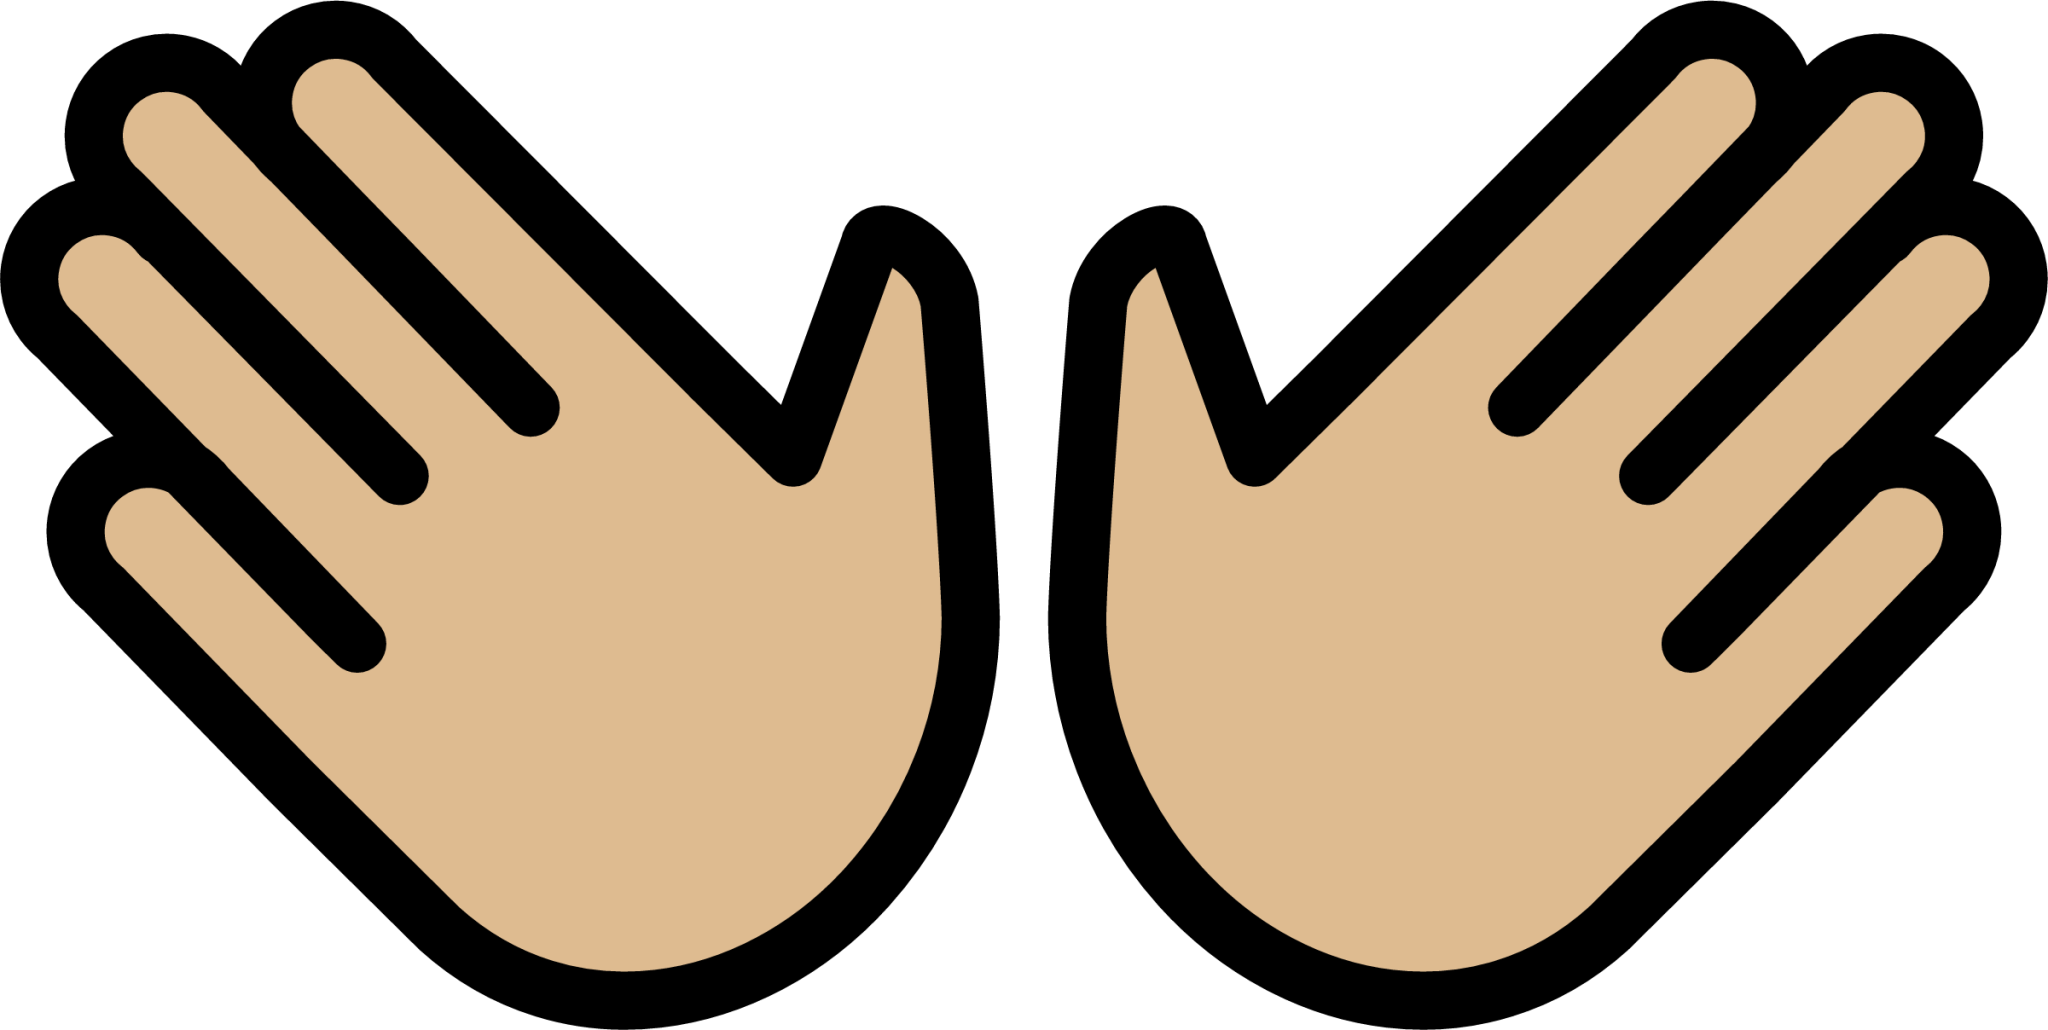 open hands: medium-light skin tone emoji